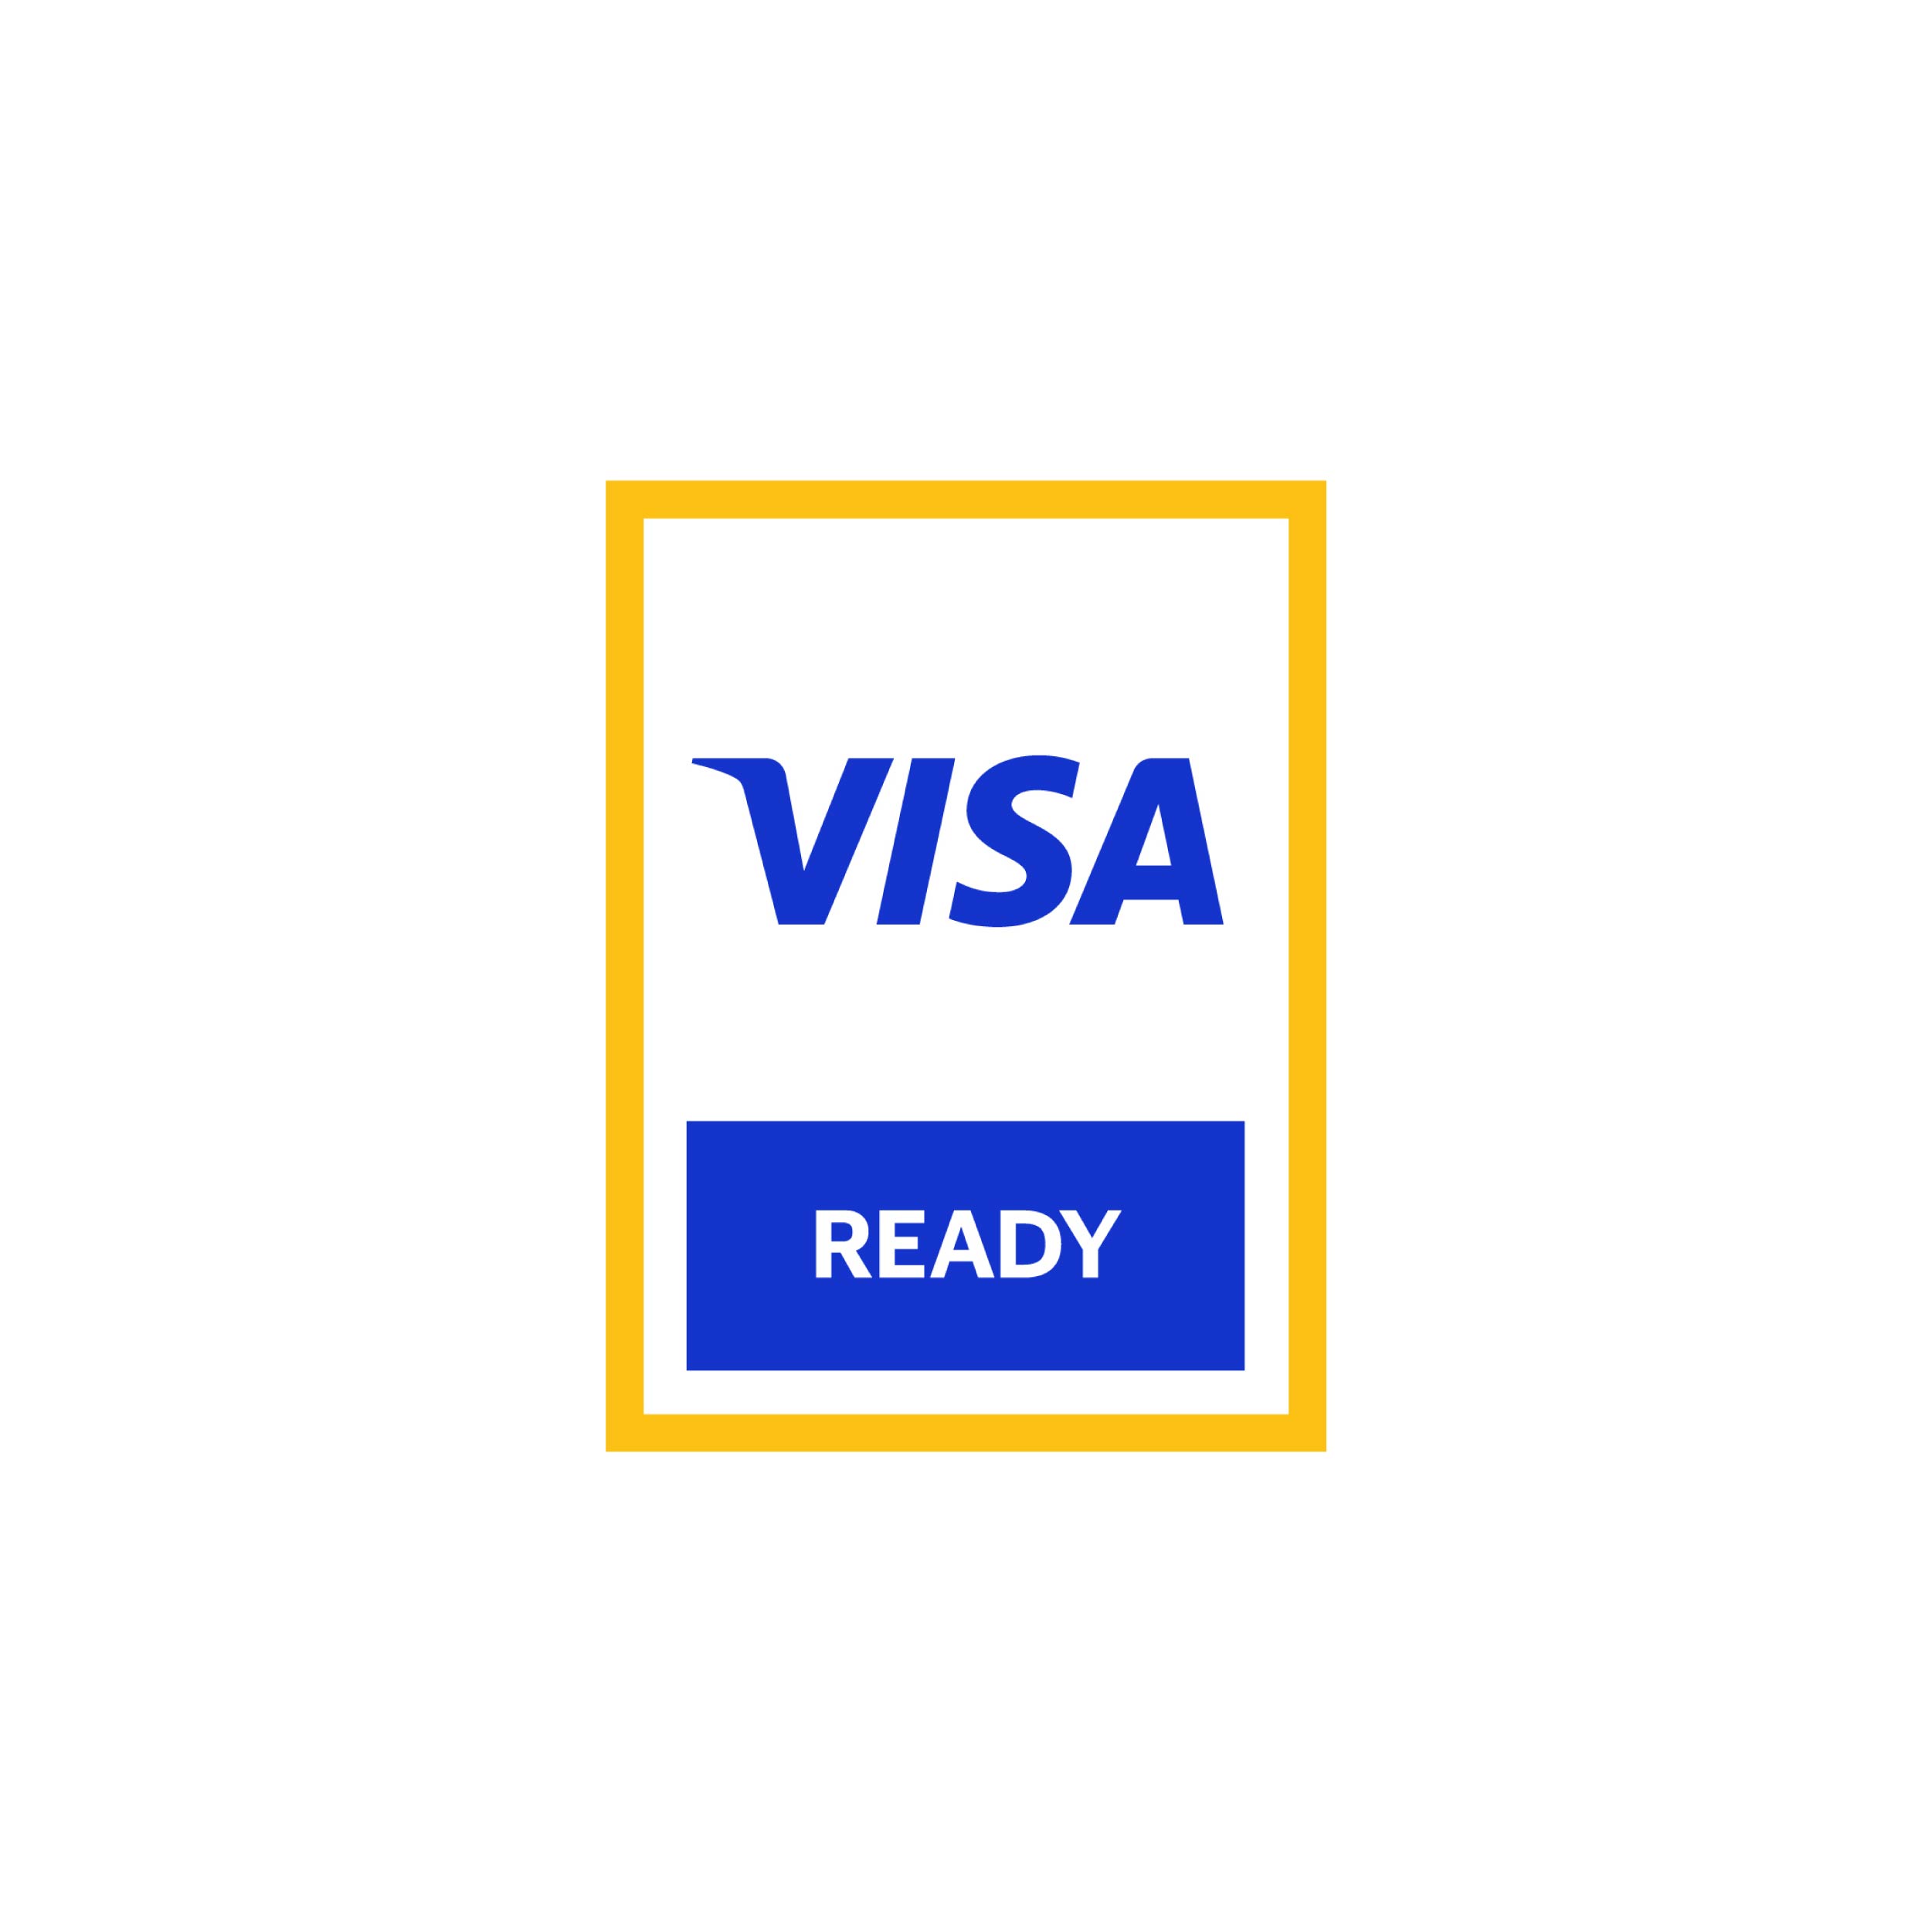 Visa Ready logo